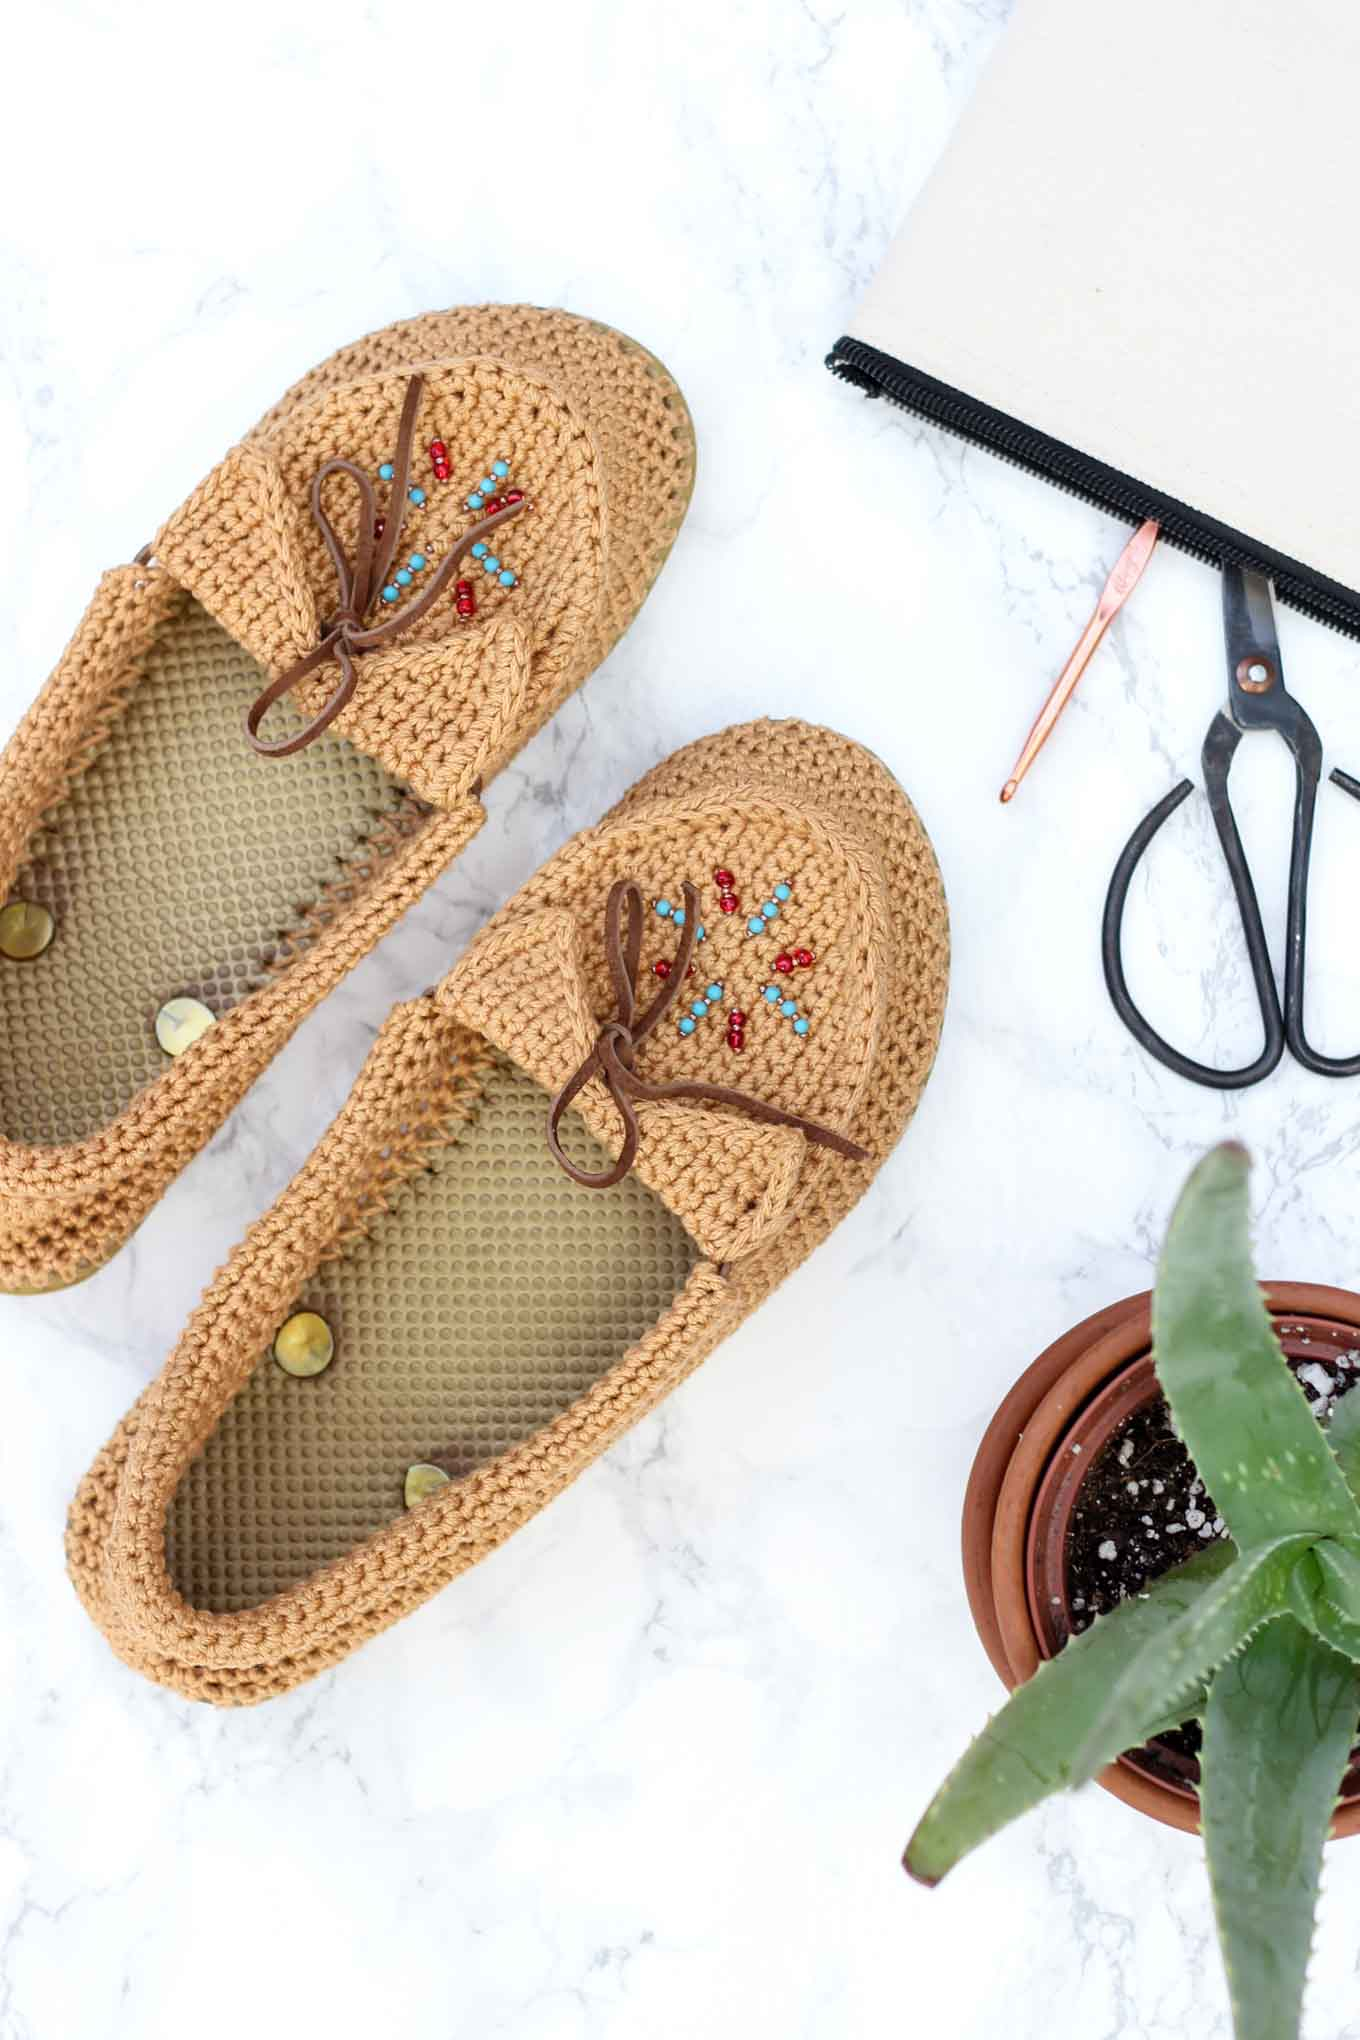 Moccasin Crochet Pattern Crochet Shoes With Flip Flop Soles Free Moccasin Pattern